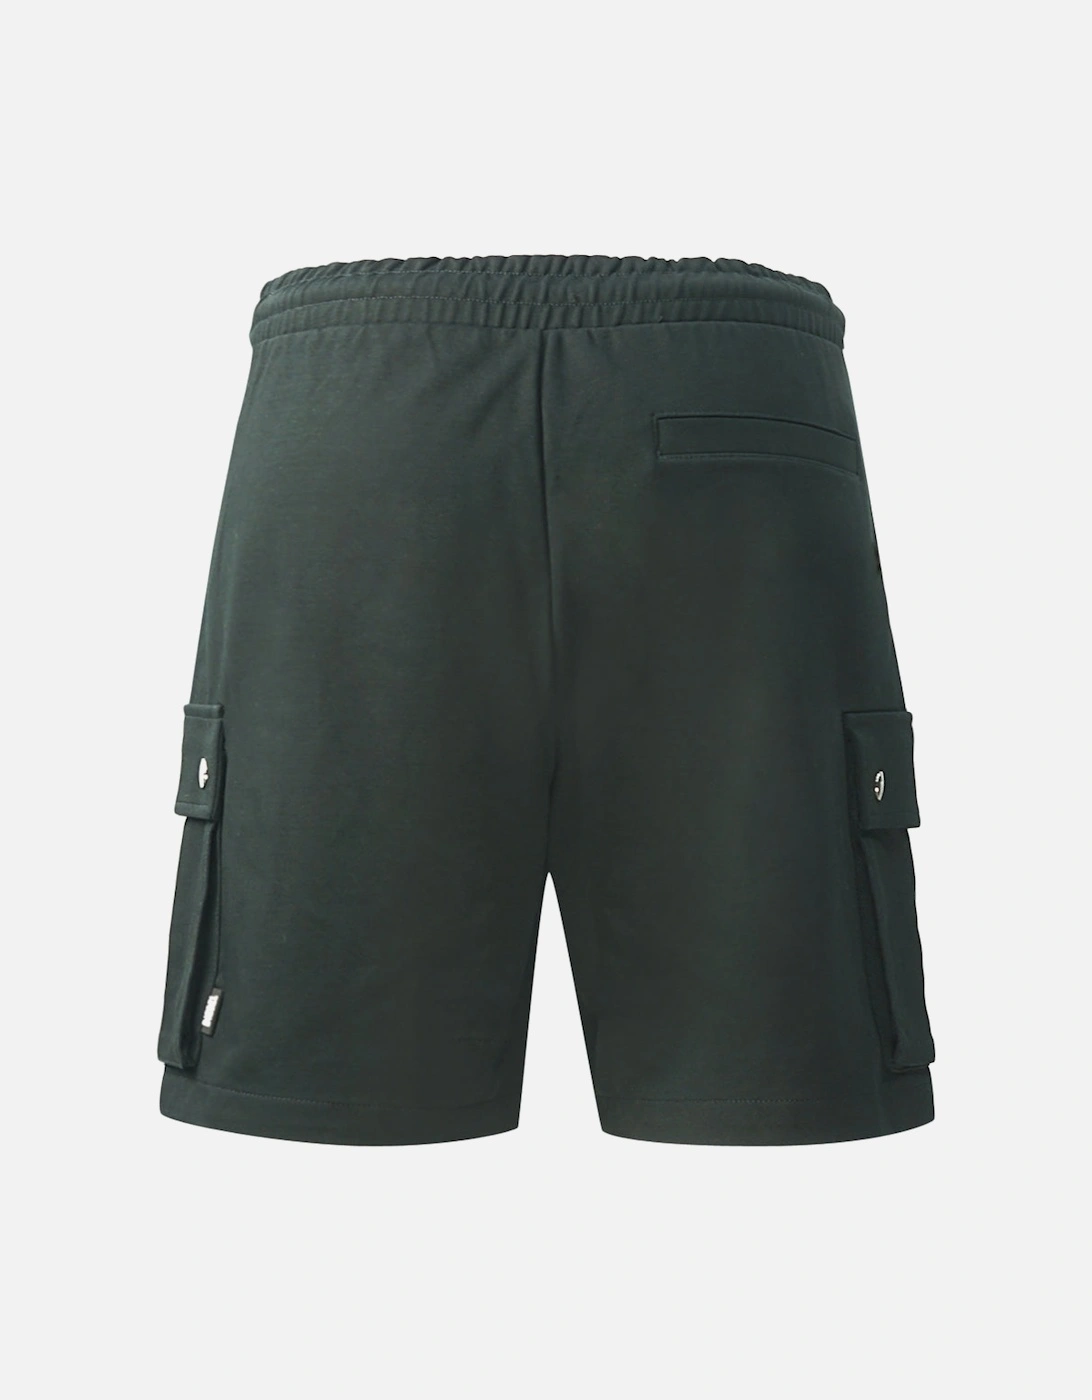 P-Prone Black Cargo Shorts